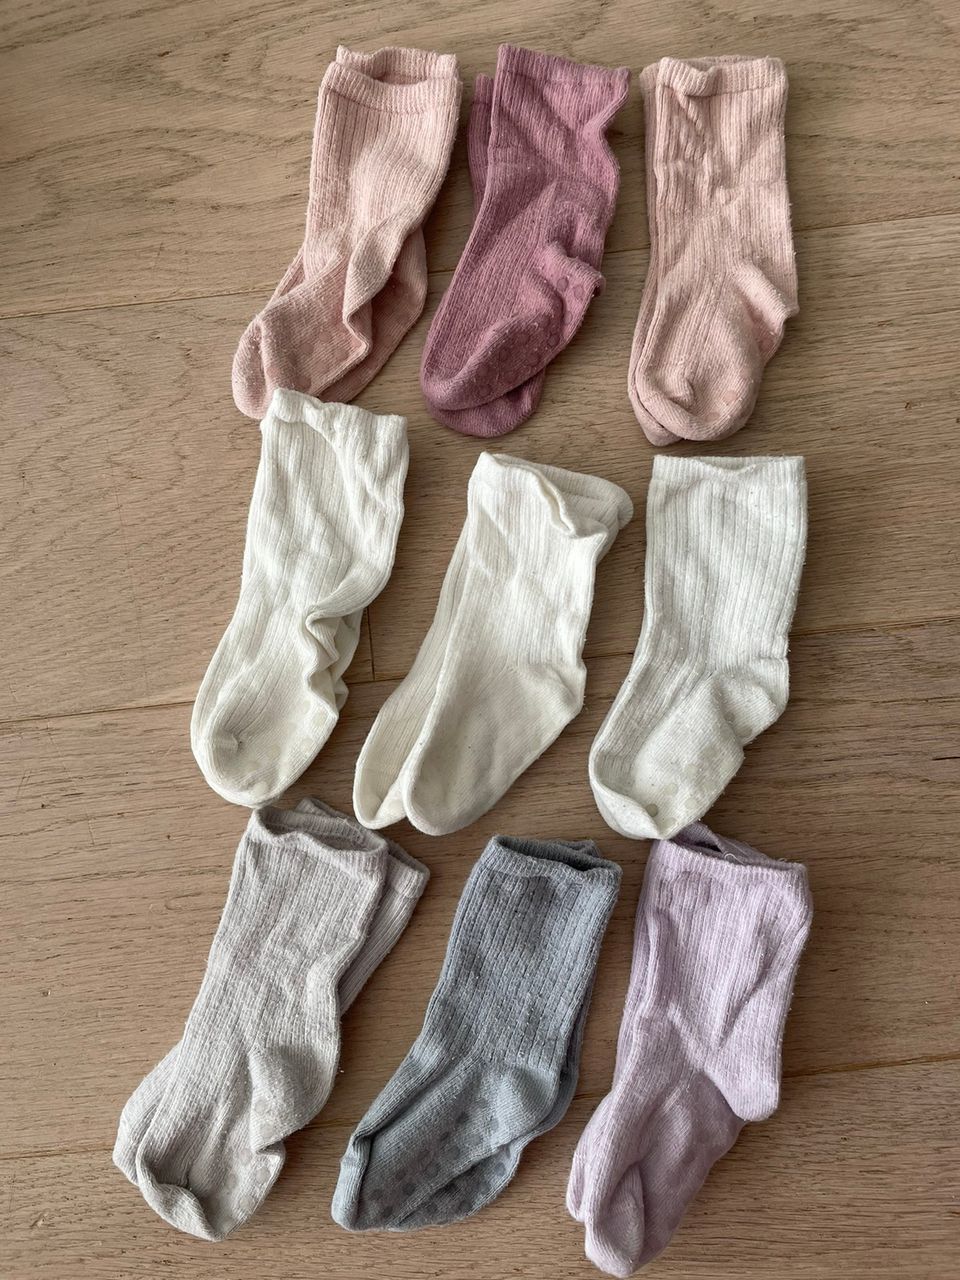 Lindexin sukkia koossa 16-18 (~10cm)